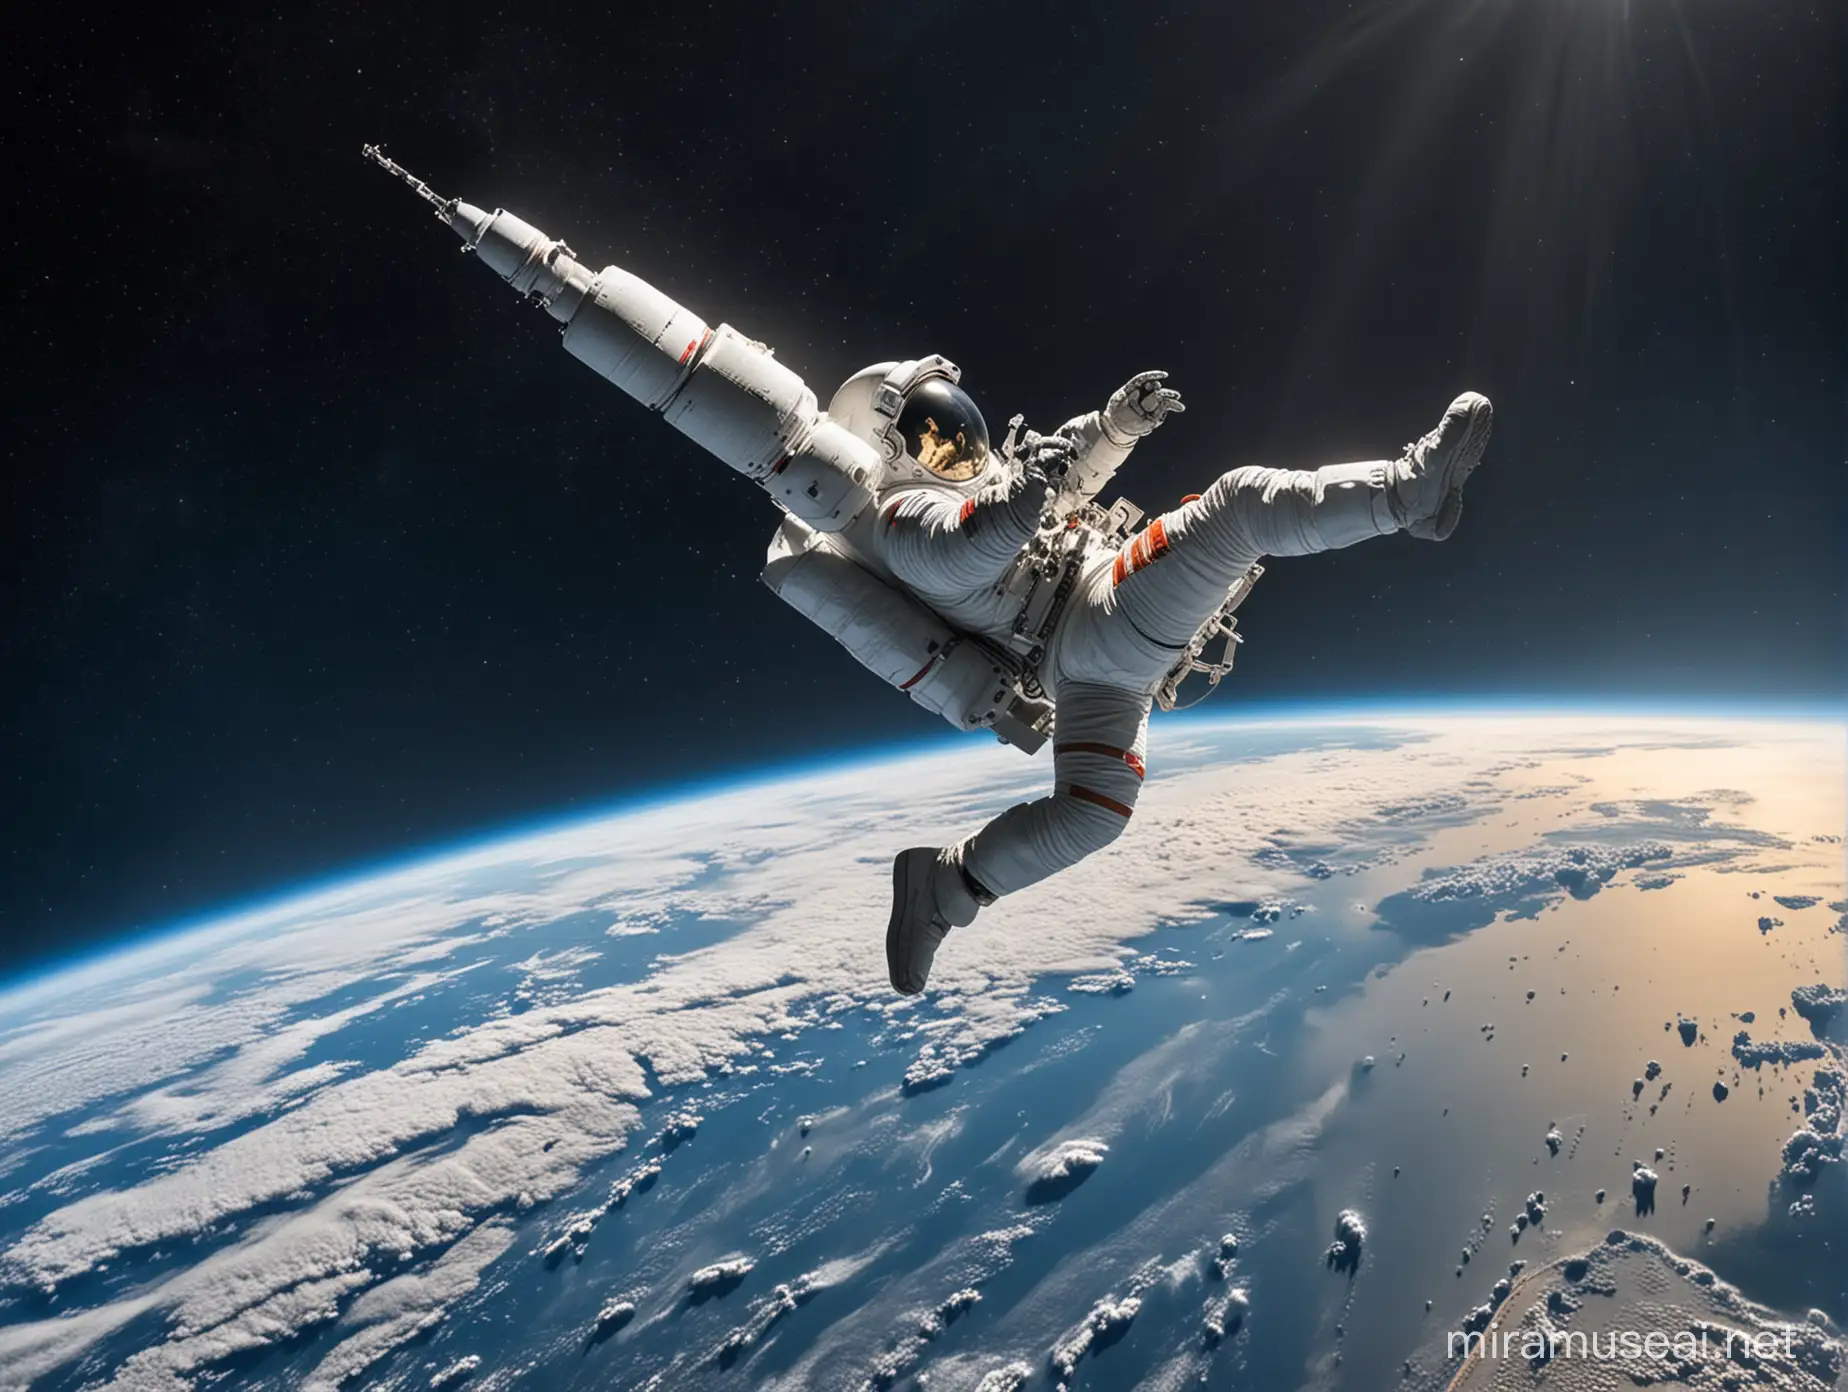 Happy International Day of Human Space Flight